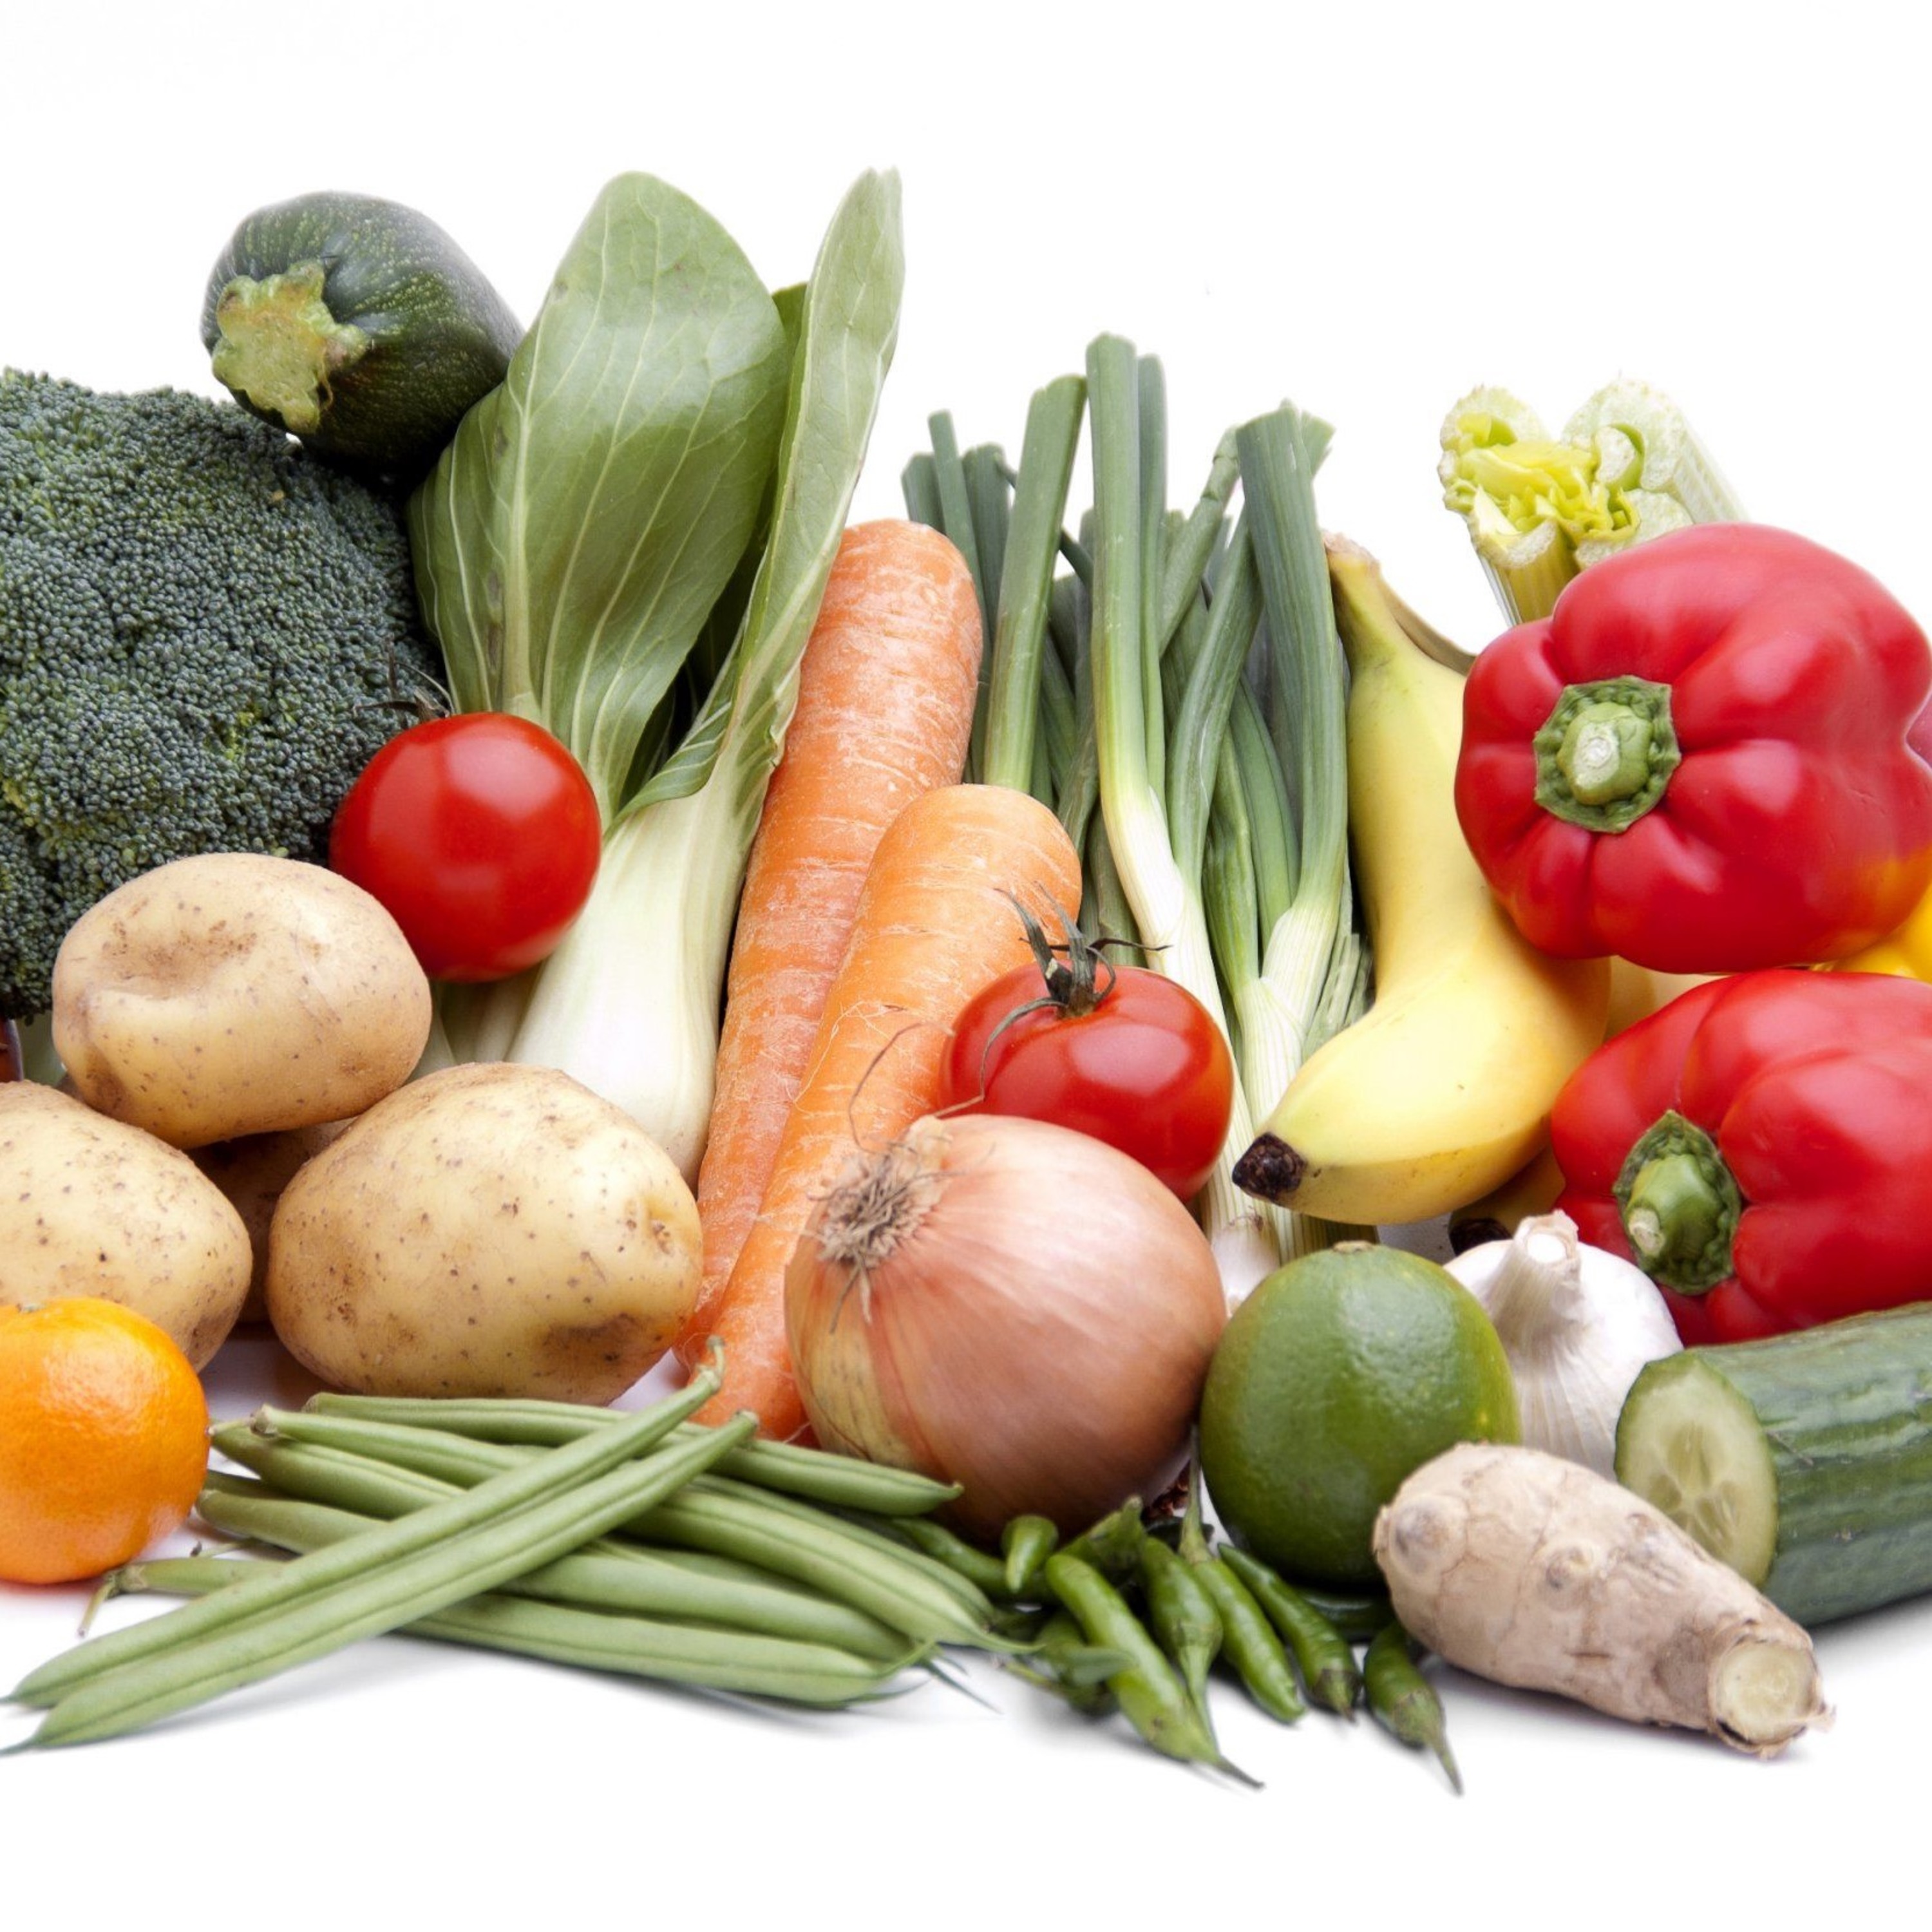 Are products of high. Овощи и фрукты. Свежие овощи и фрукты. Ассортимент овощей. Плоды и овощи.